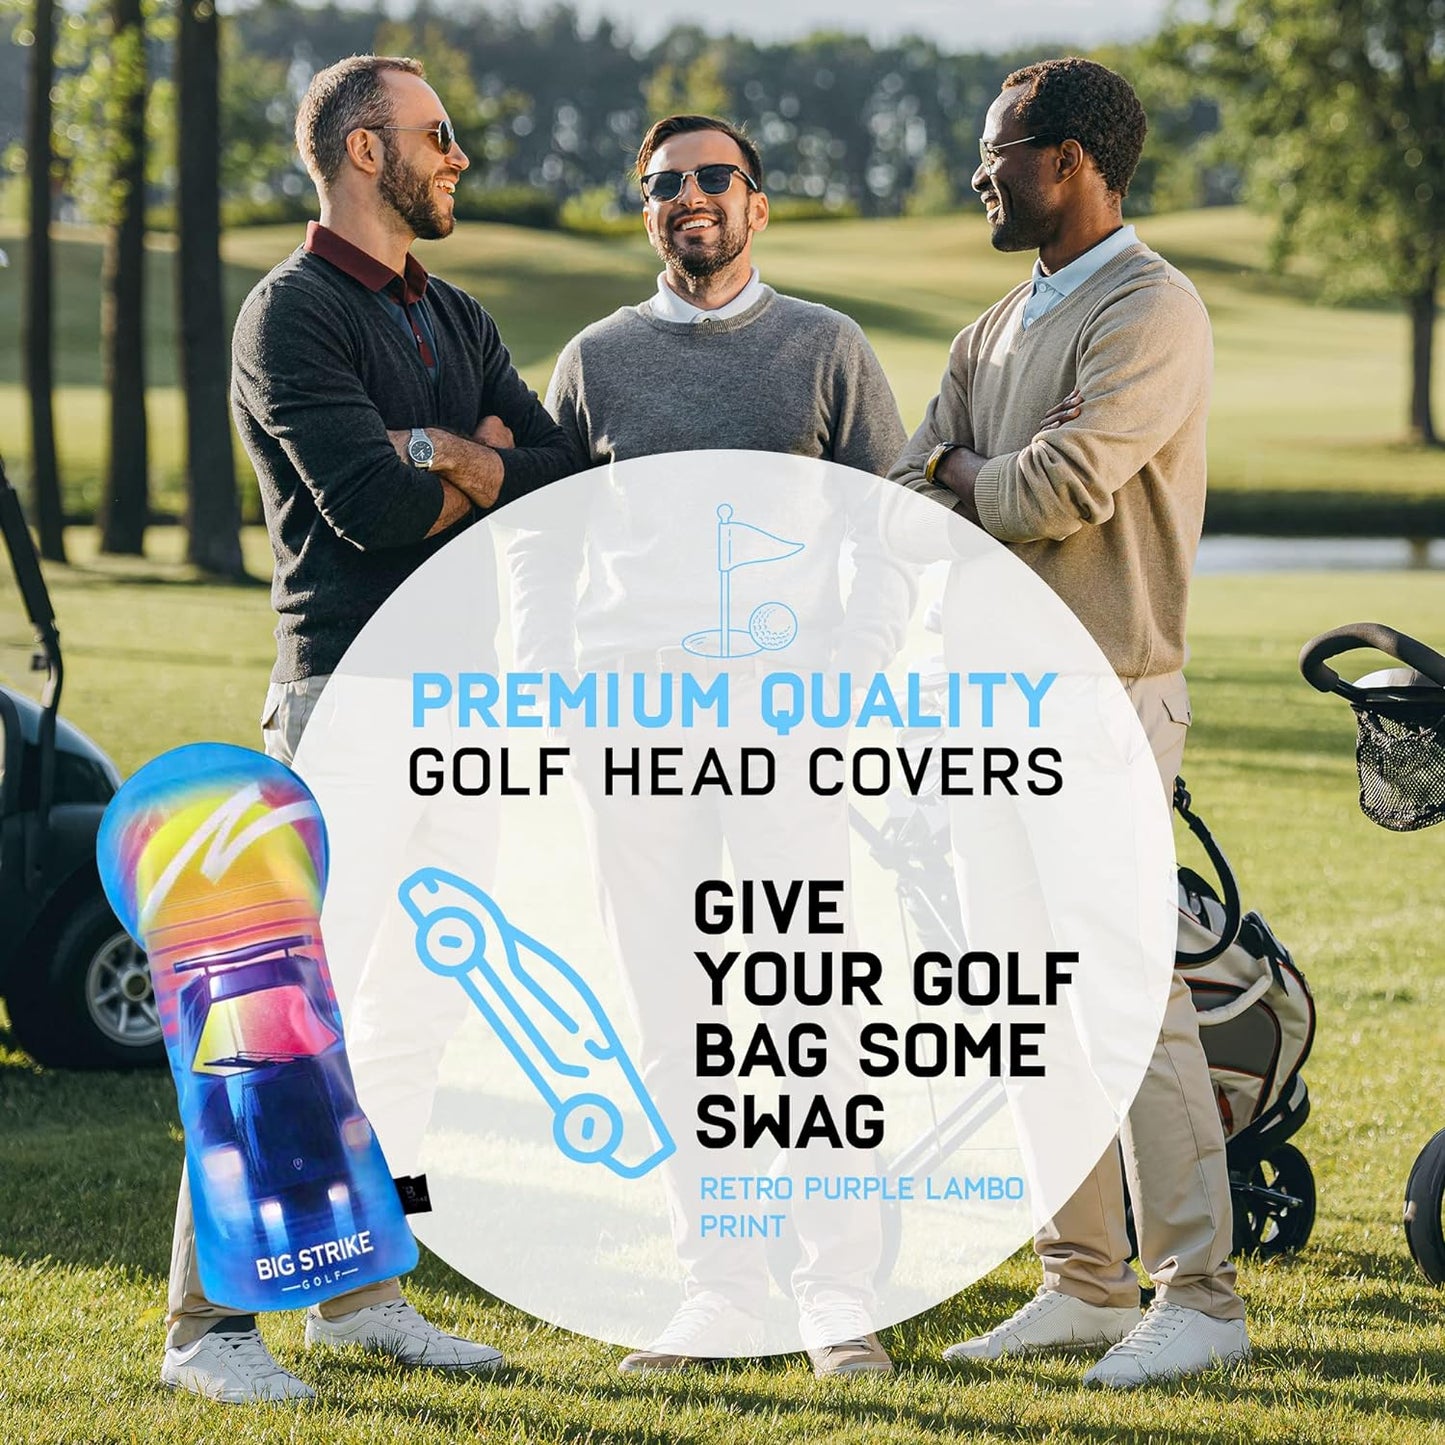 Big Strike Golf - Premium Golf Club Driver Head Covers - Modern Design PU Leather Headcovers (Retro Lambo Sunset)